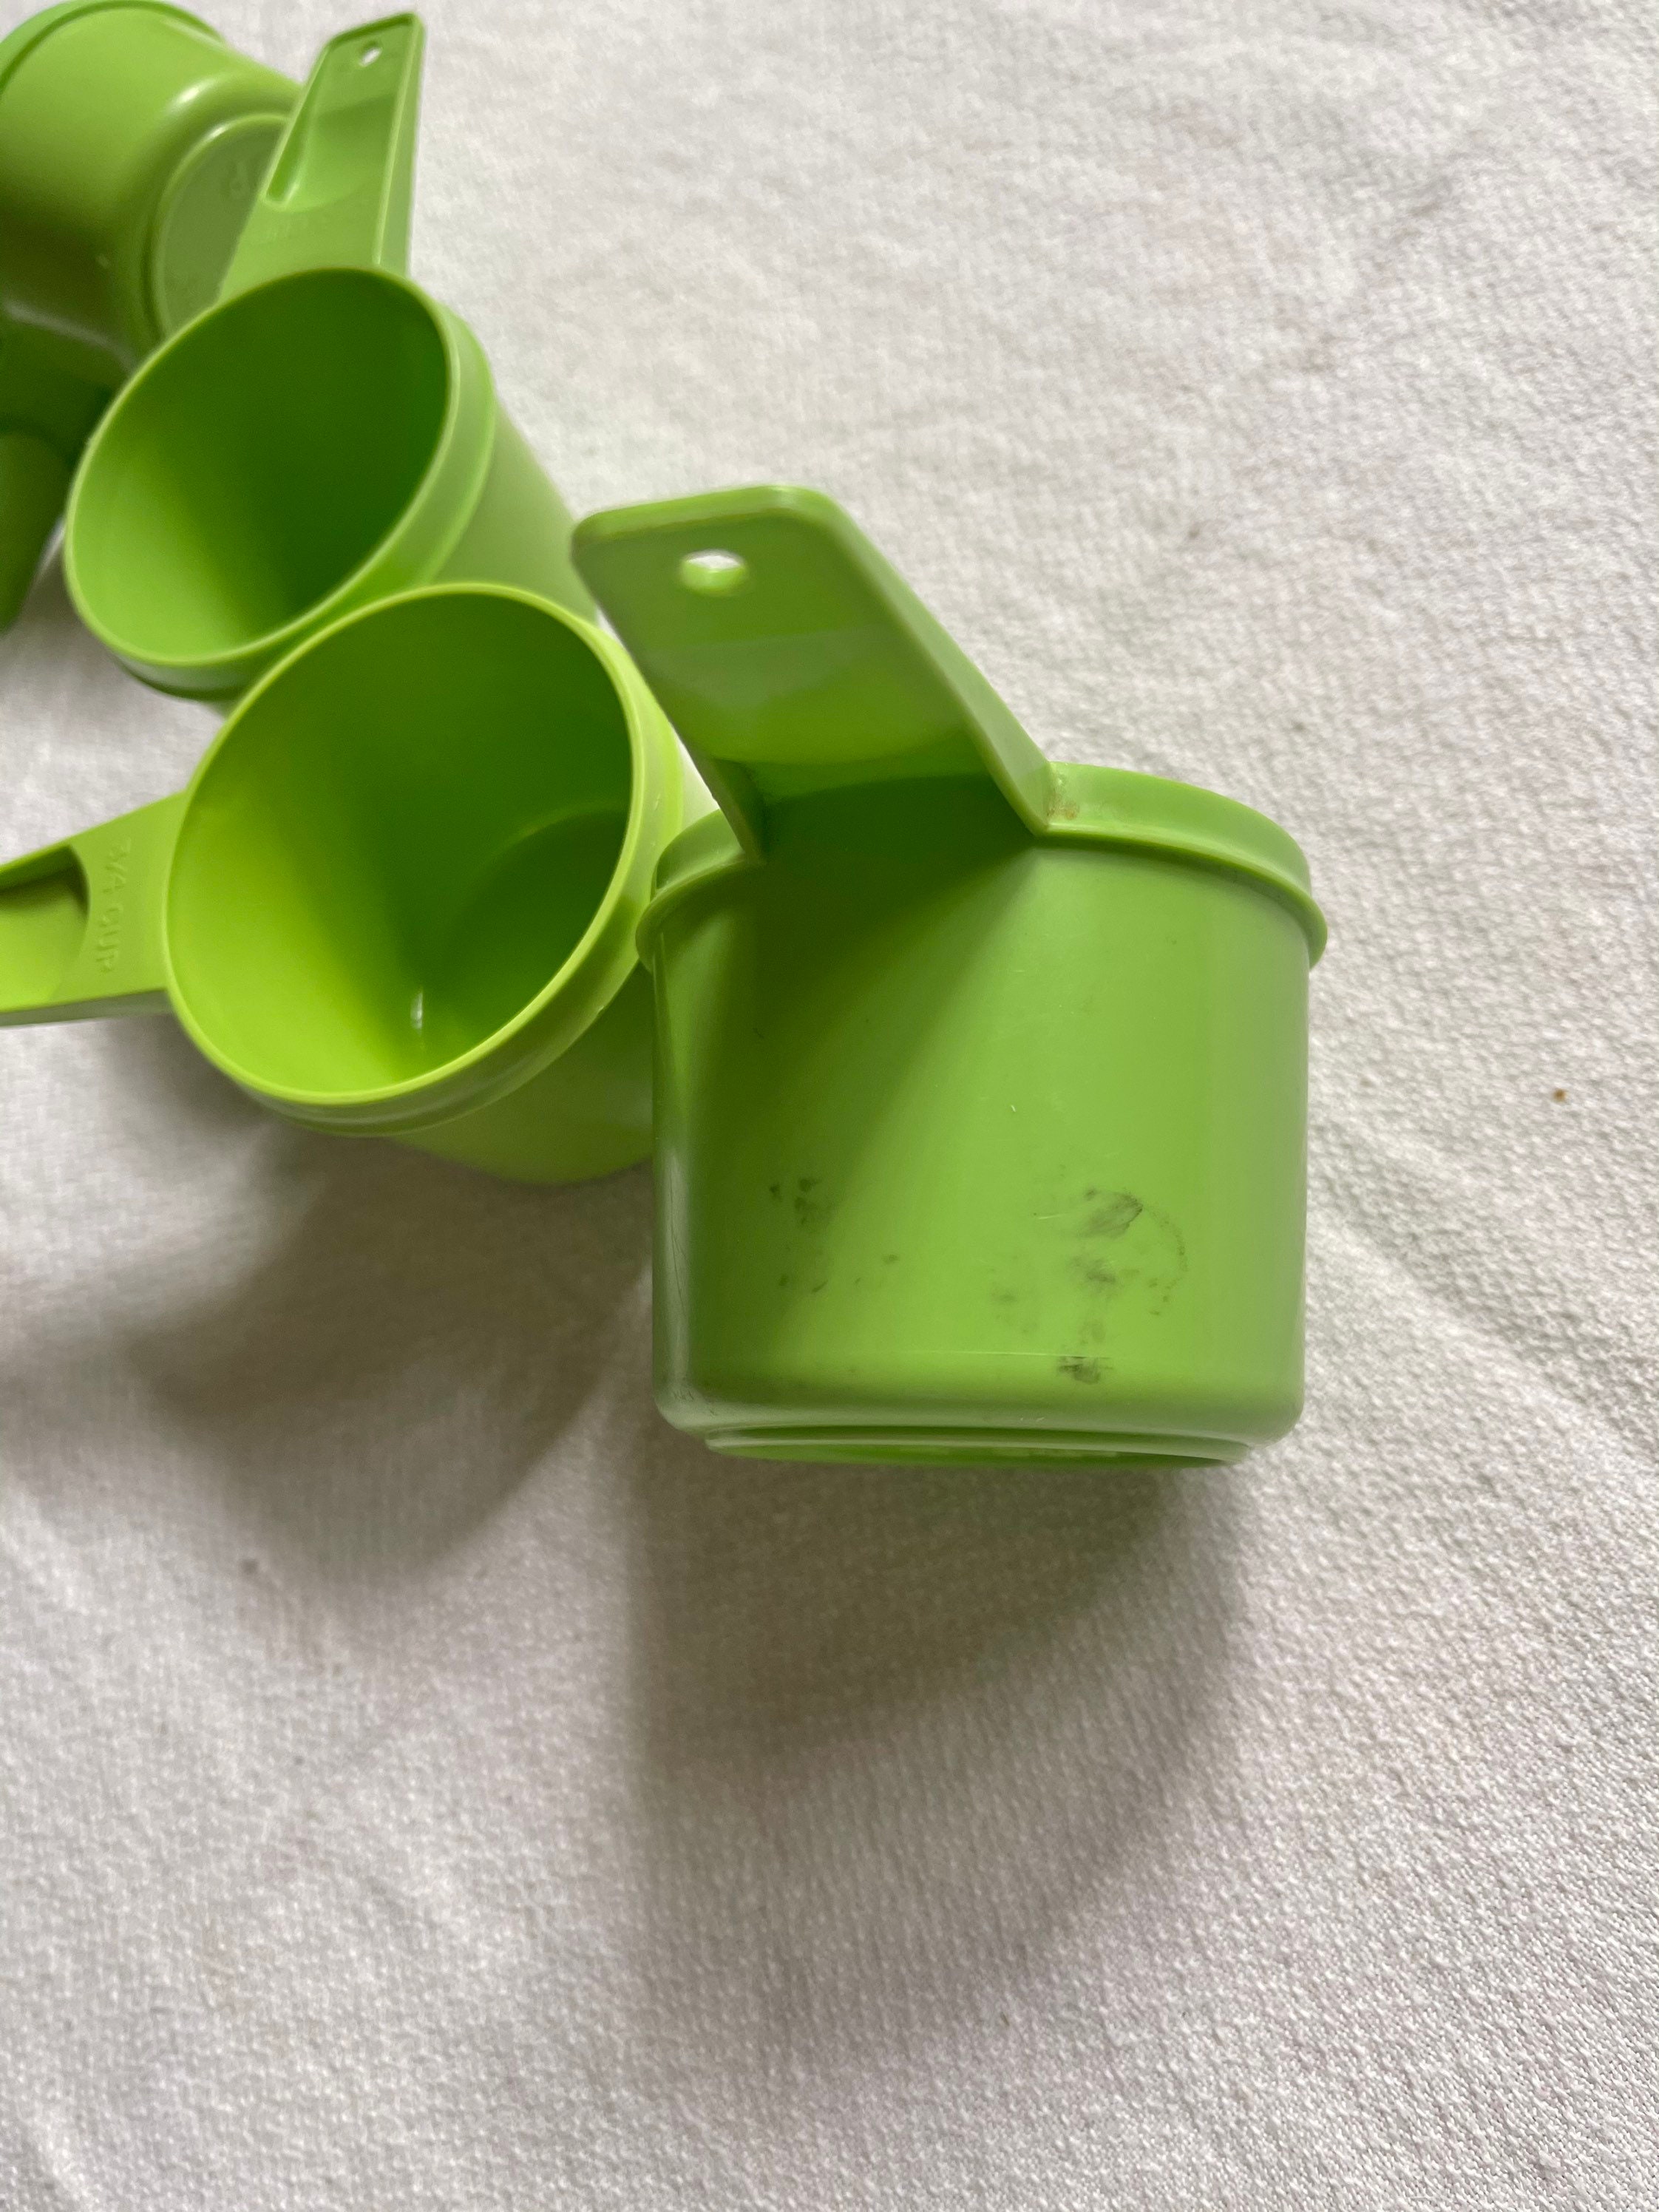 New Vintage Tupperware Measuring Cups Set of 6 Flat Apple Green